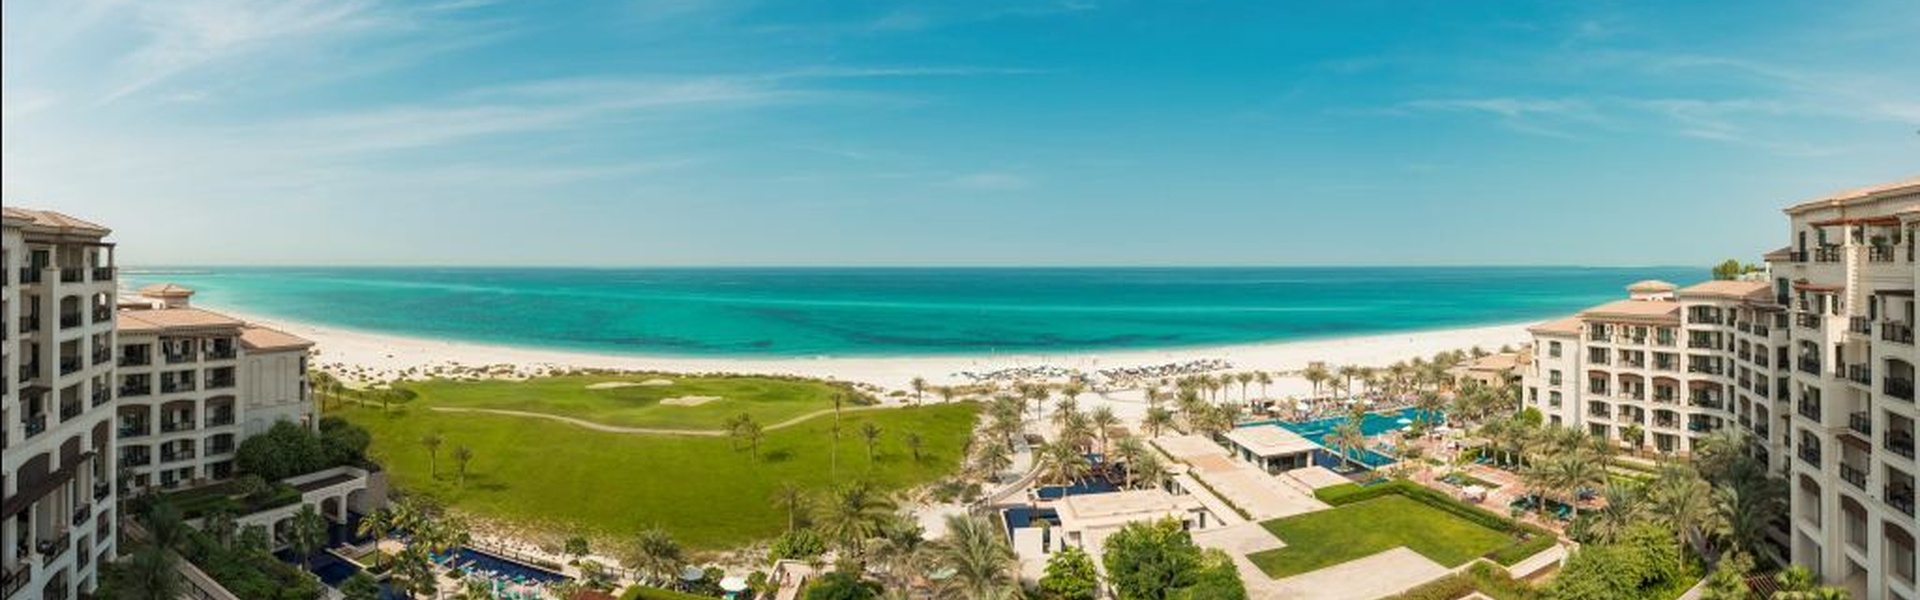 The St. Regis Saadiyat Island Resort, Abu Dhabi - Background